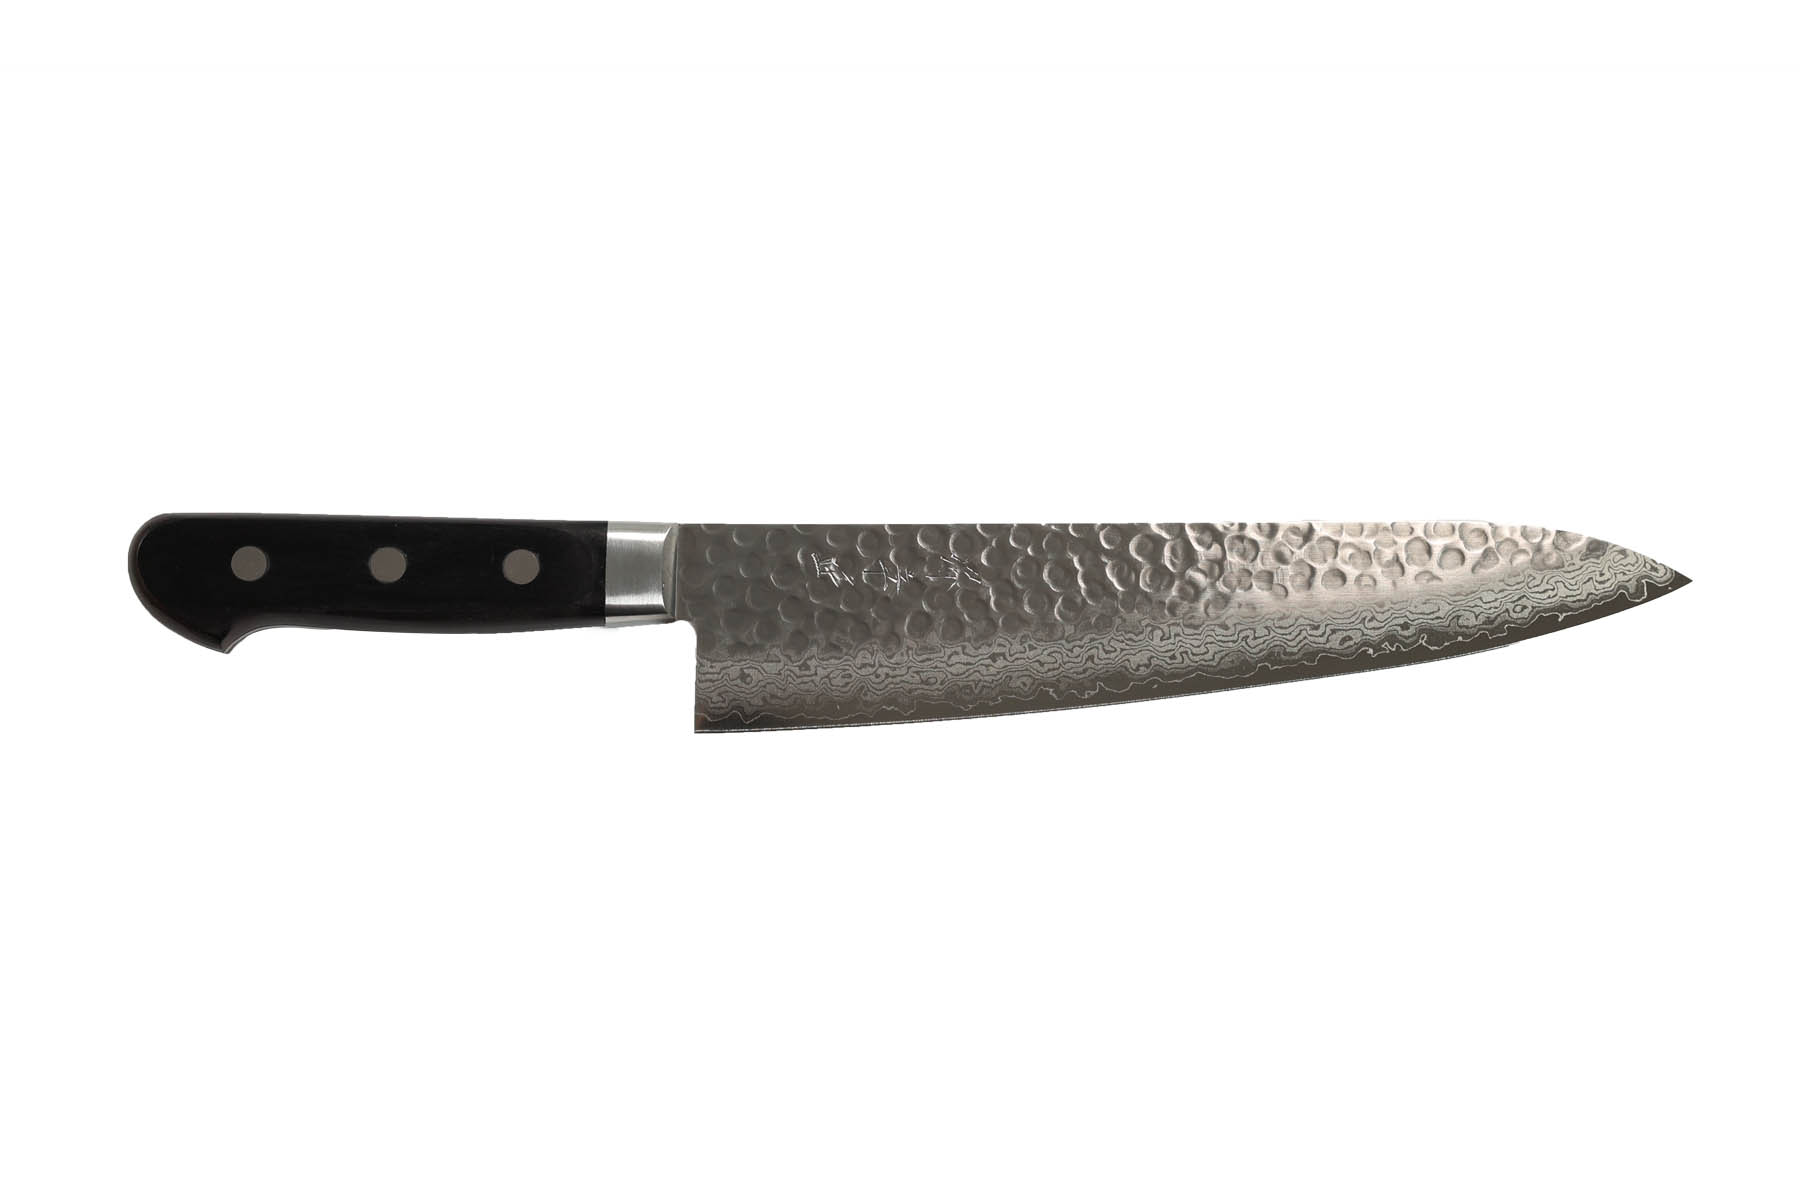 Couteau japonais artisanal Musakichi VG10 Damas - Couteau Gyuto 24 cm pakka wood noir